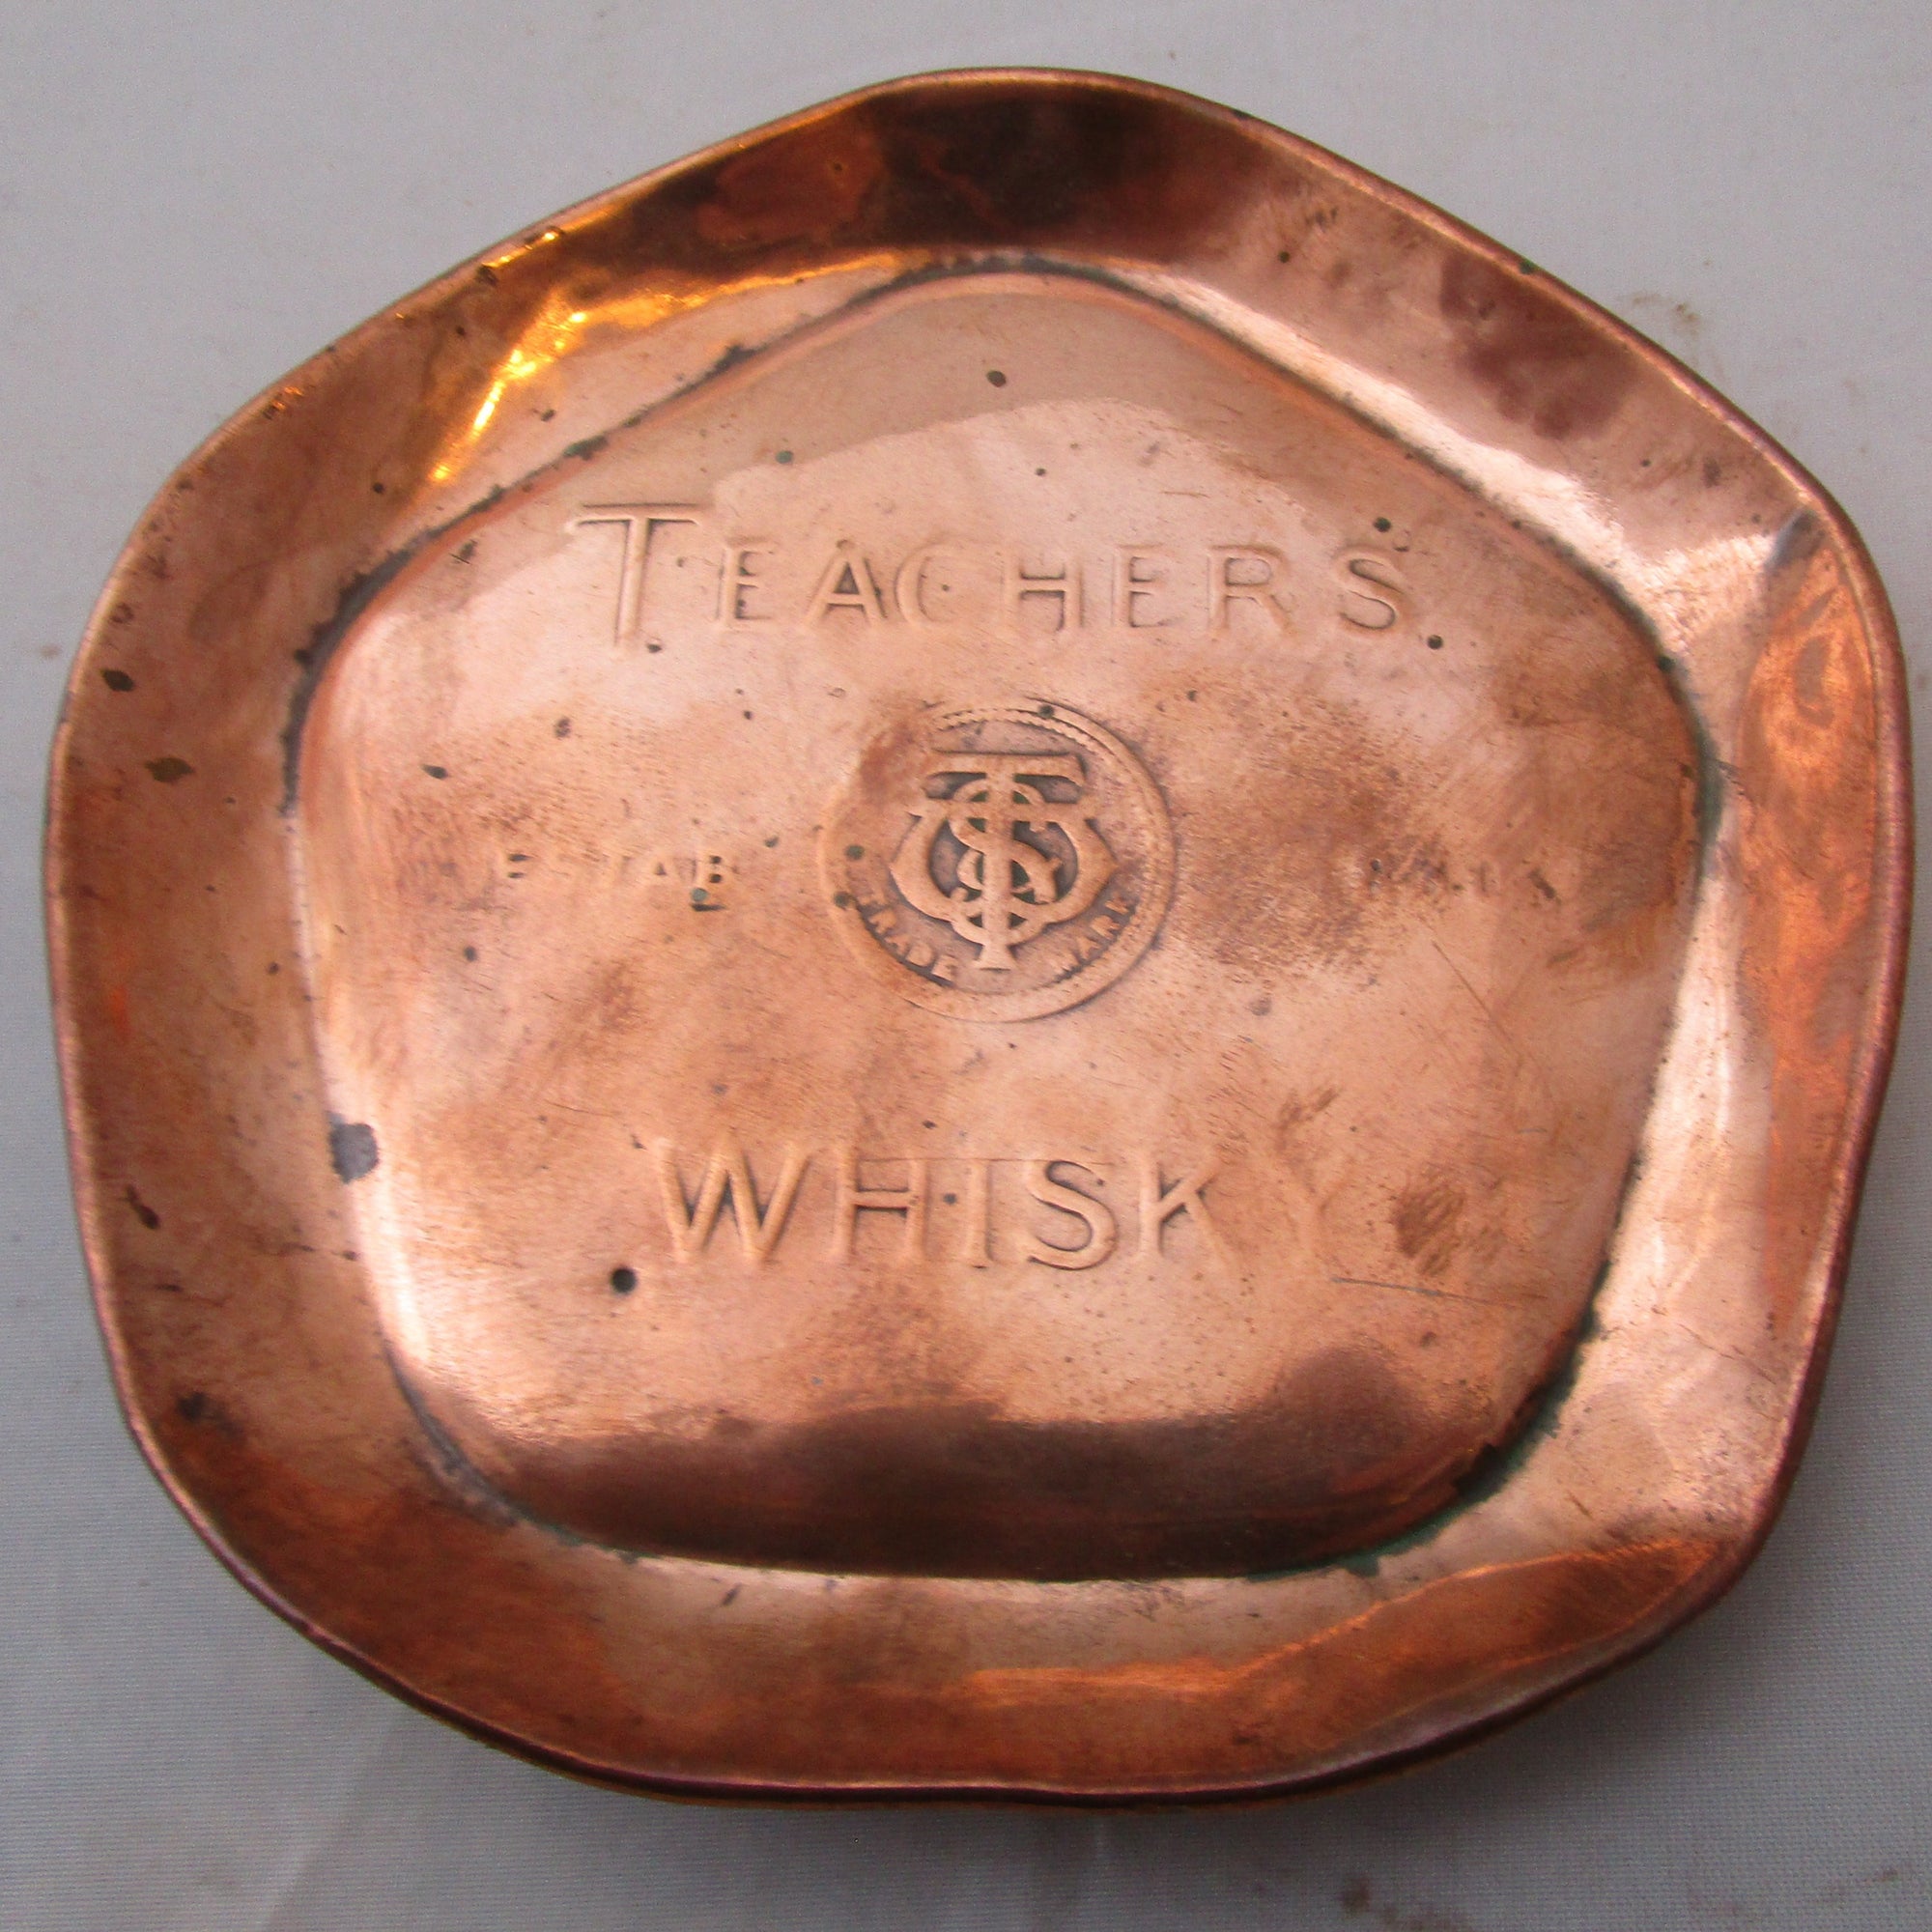 Handbeaten Copper Teachers Whiskey Coaster Vintage c1940